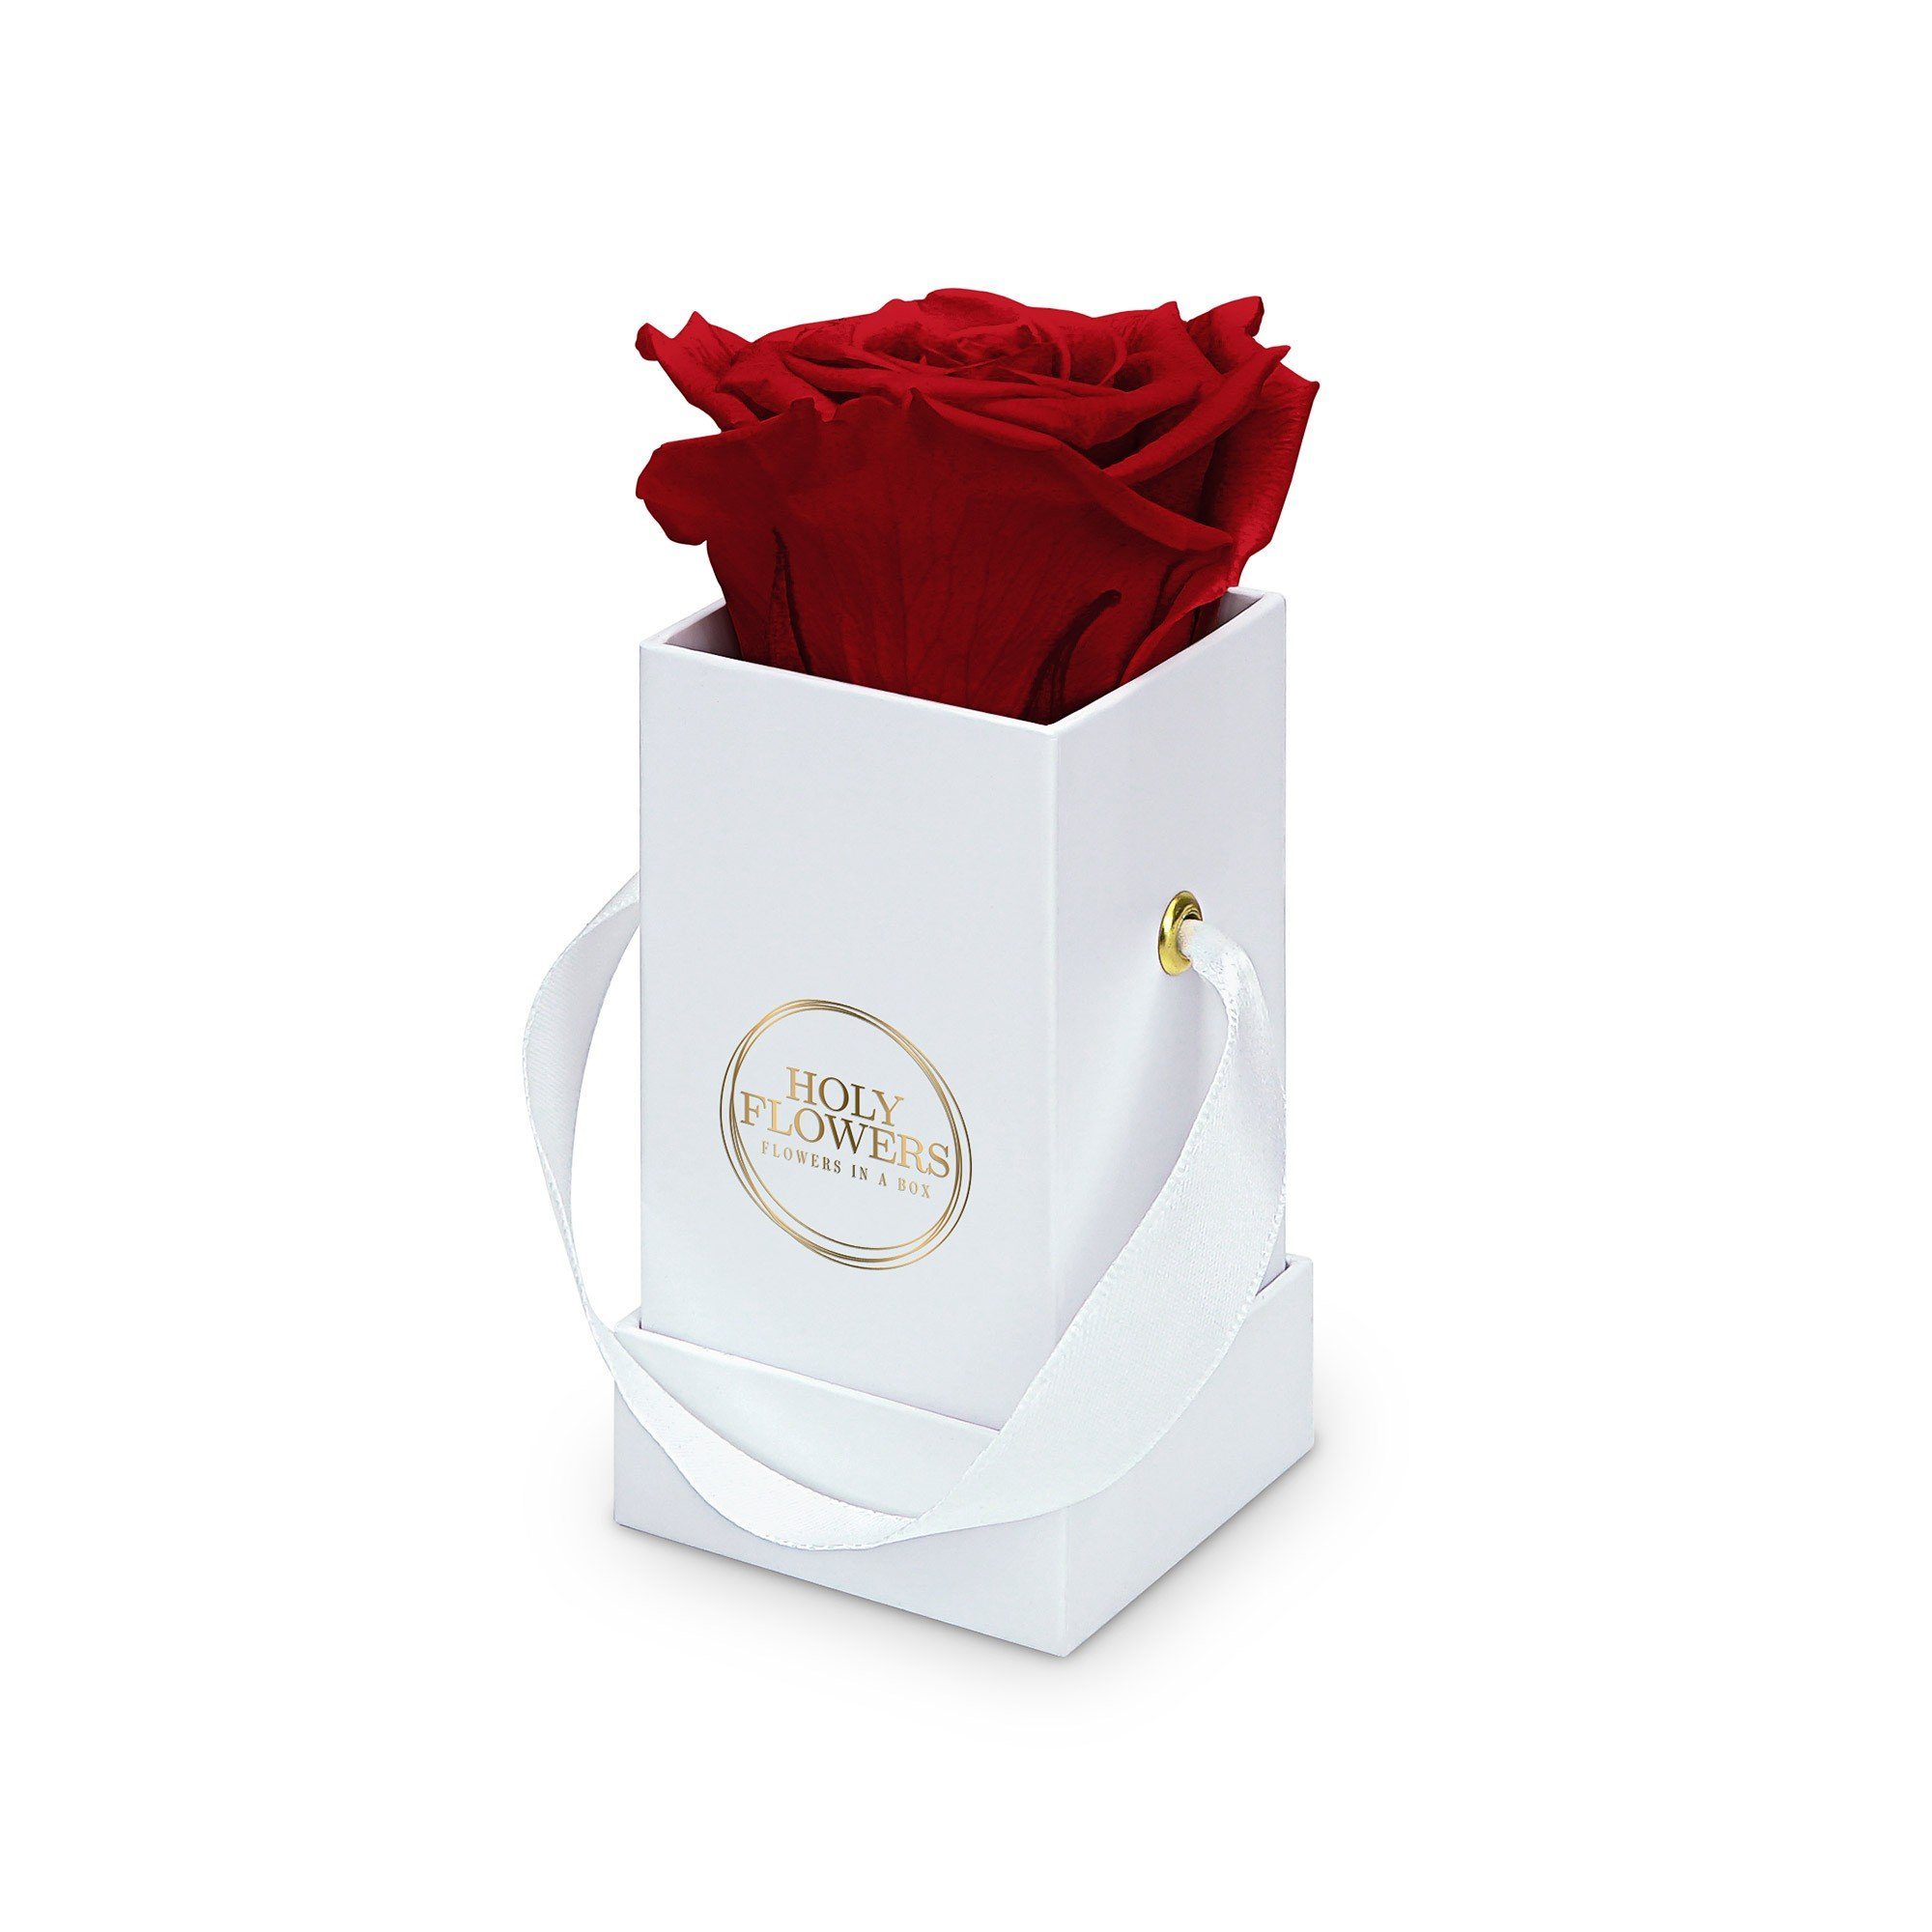 I by Kunstblume Infinity Red Rosenbox mit Heritage Eckige I cm Rose I in konservierte Rose, 1er Jahre Blumen Richter Höhe 3 haltbar Flowers, weiß Infinity duftende Holy Raul Echte, 9